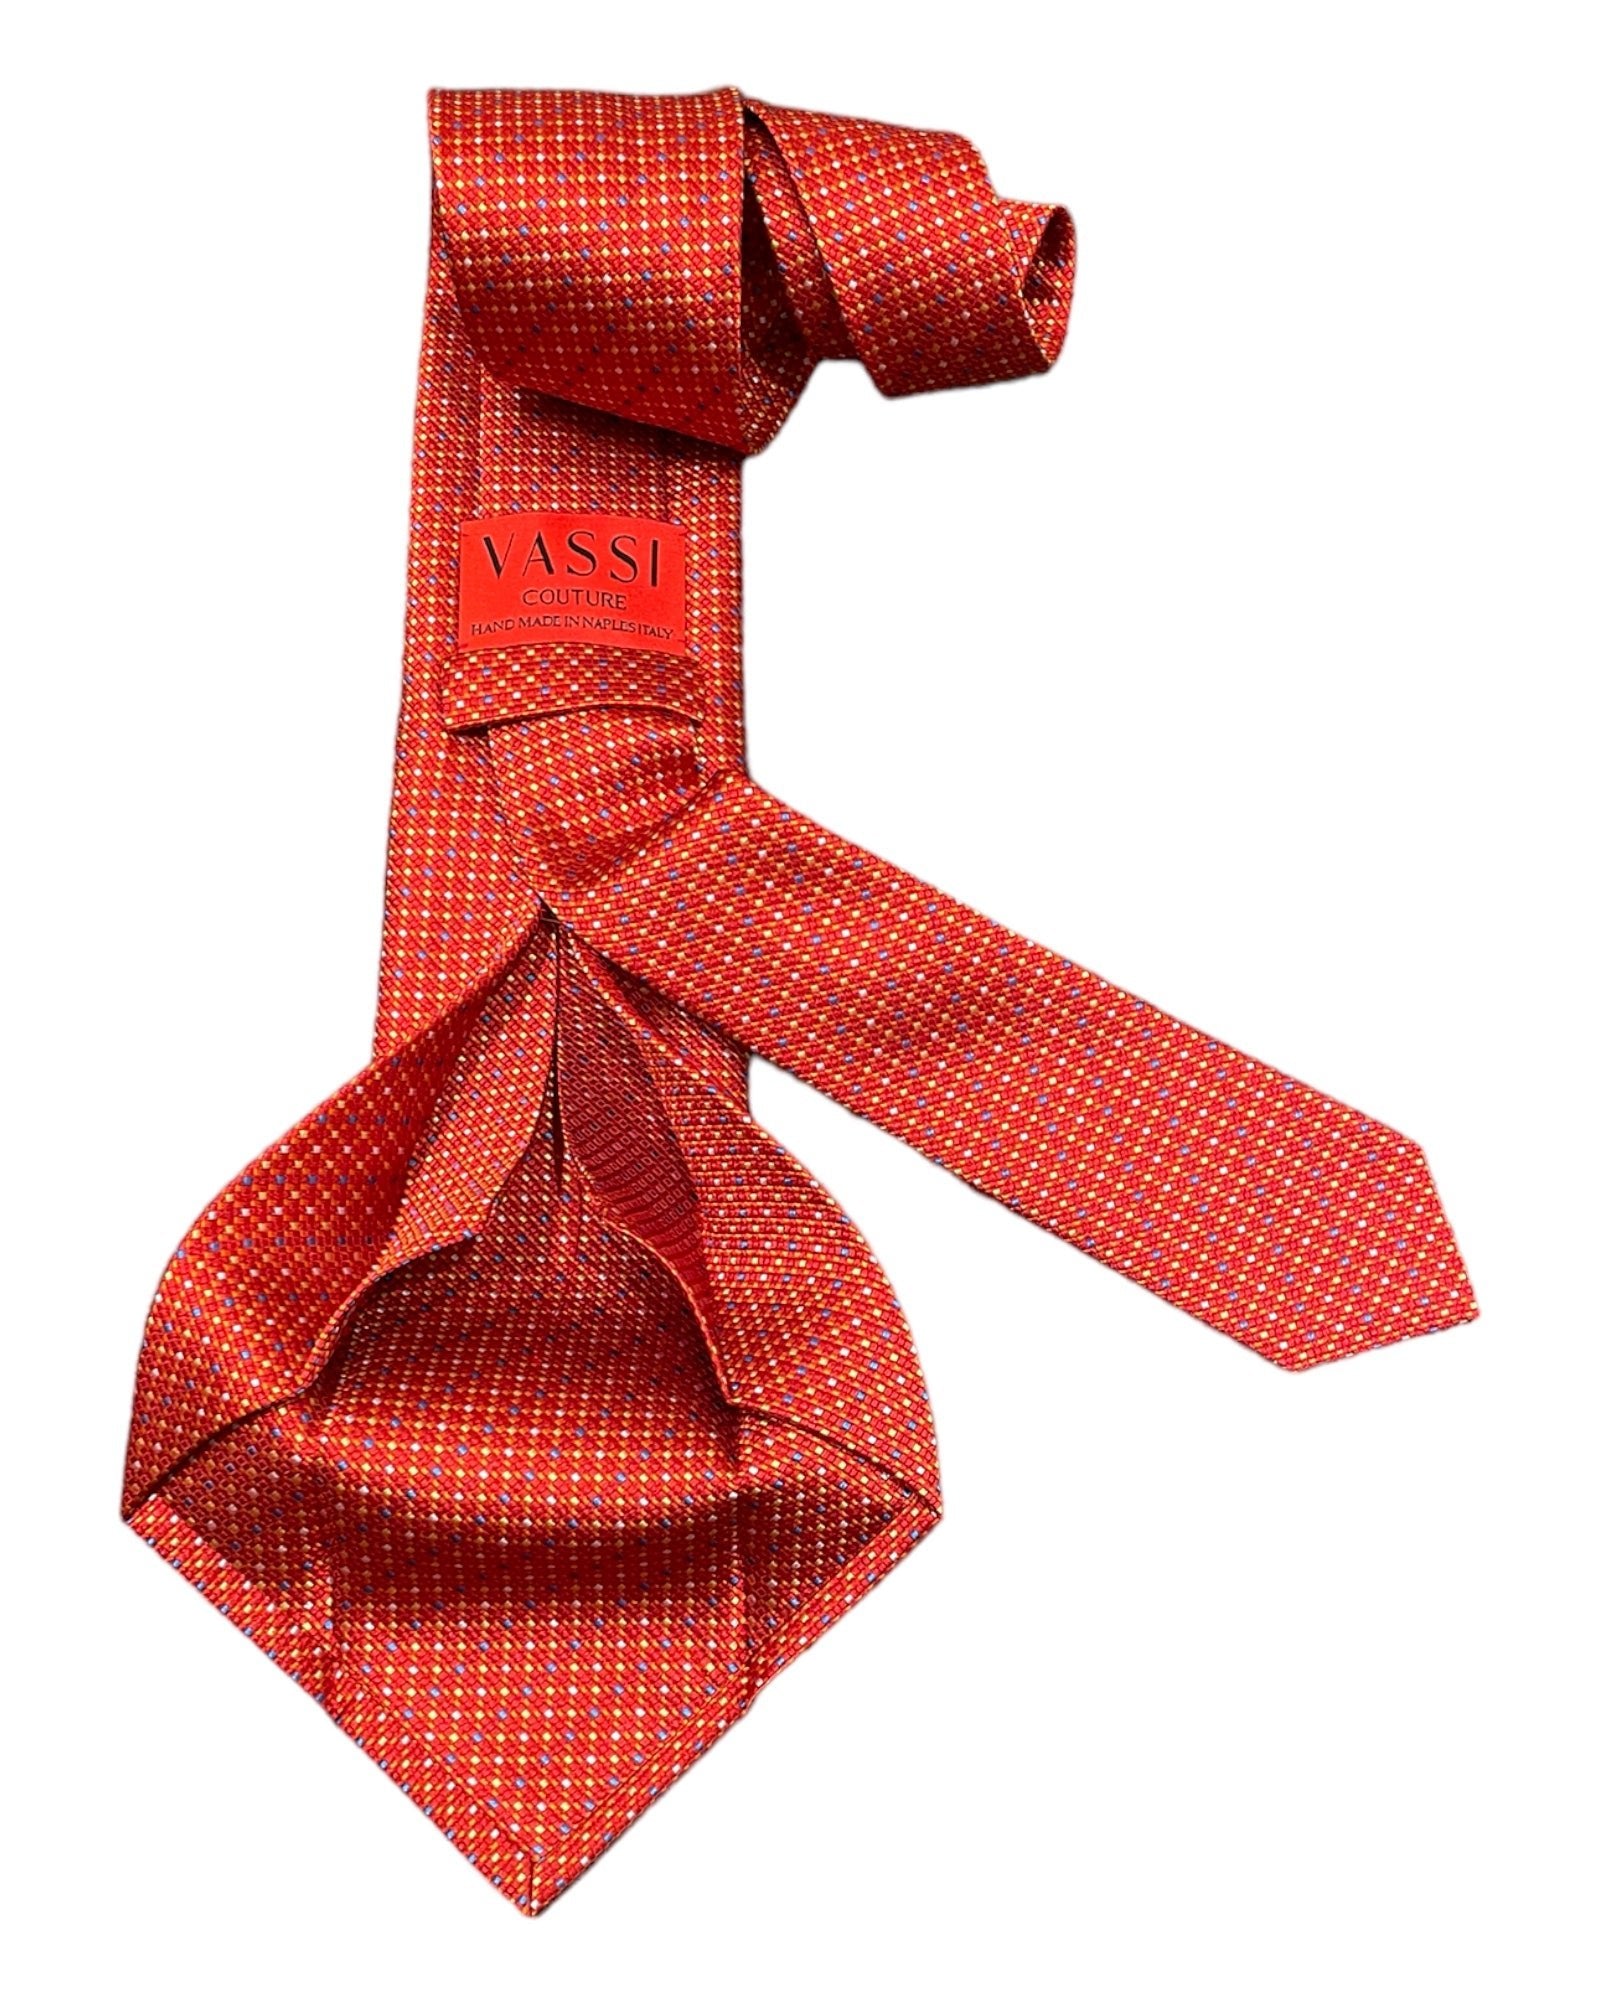 Seven-Fold Broken Regimental Stripe Silk Tie - Vermilion TIES